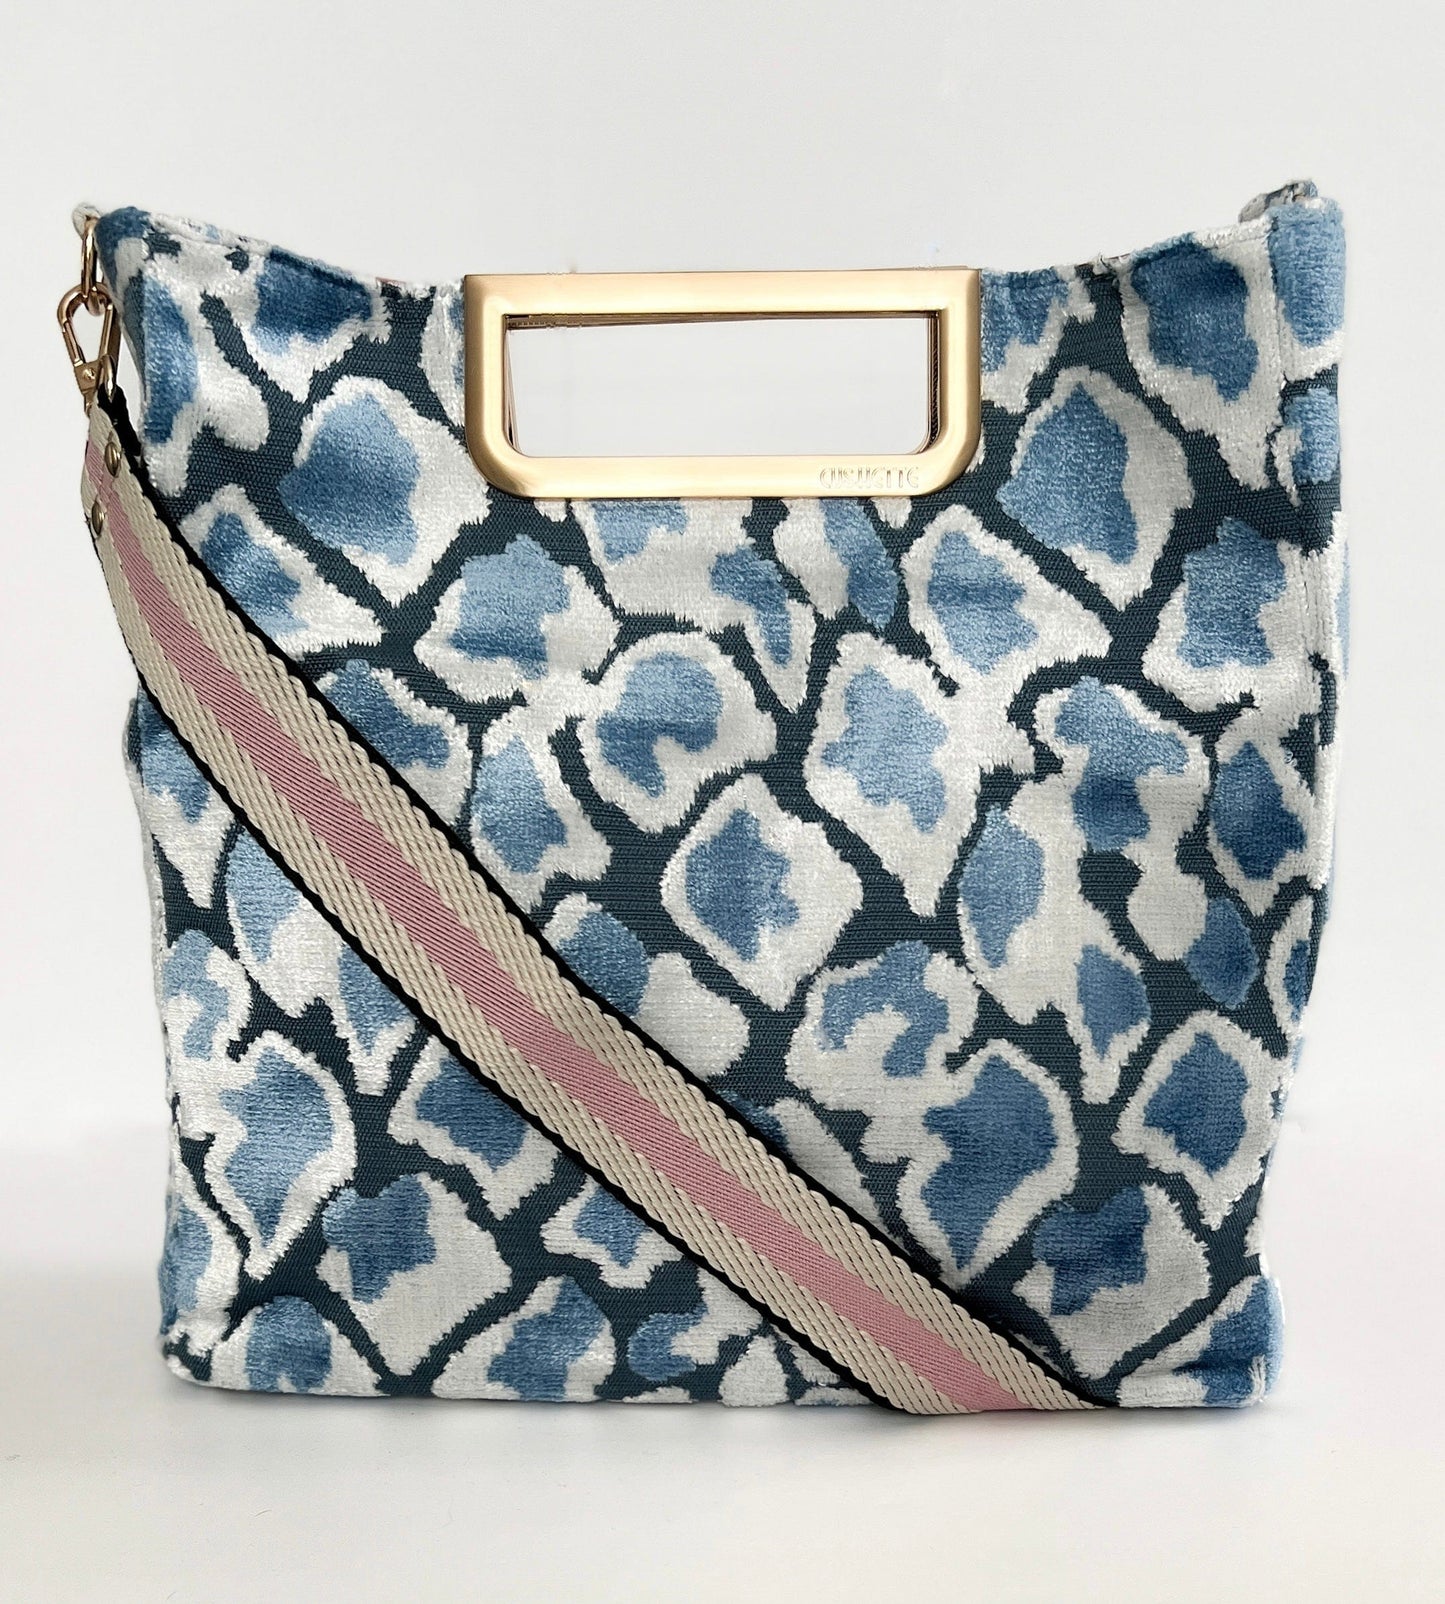 Blue leopard Jane crossbody handbag - Brushed gold hardware